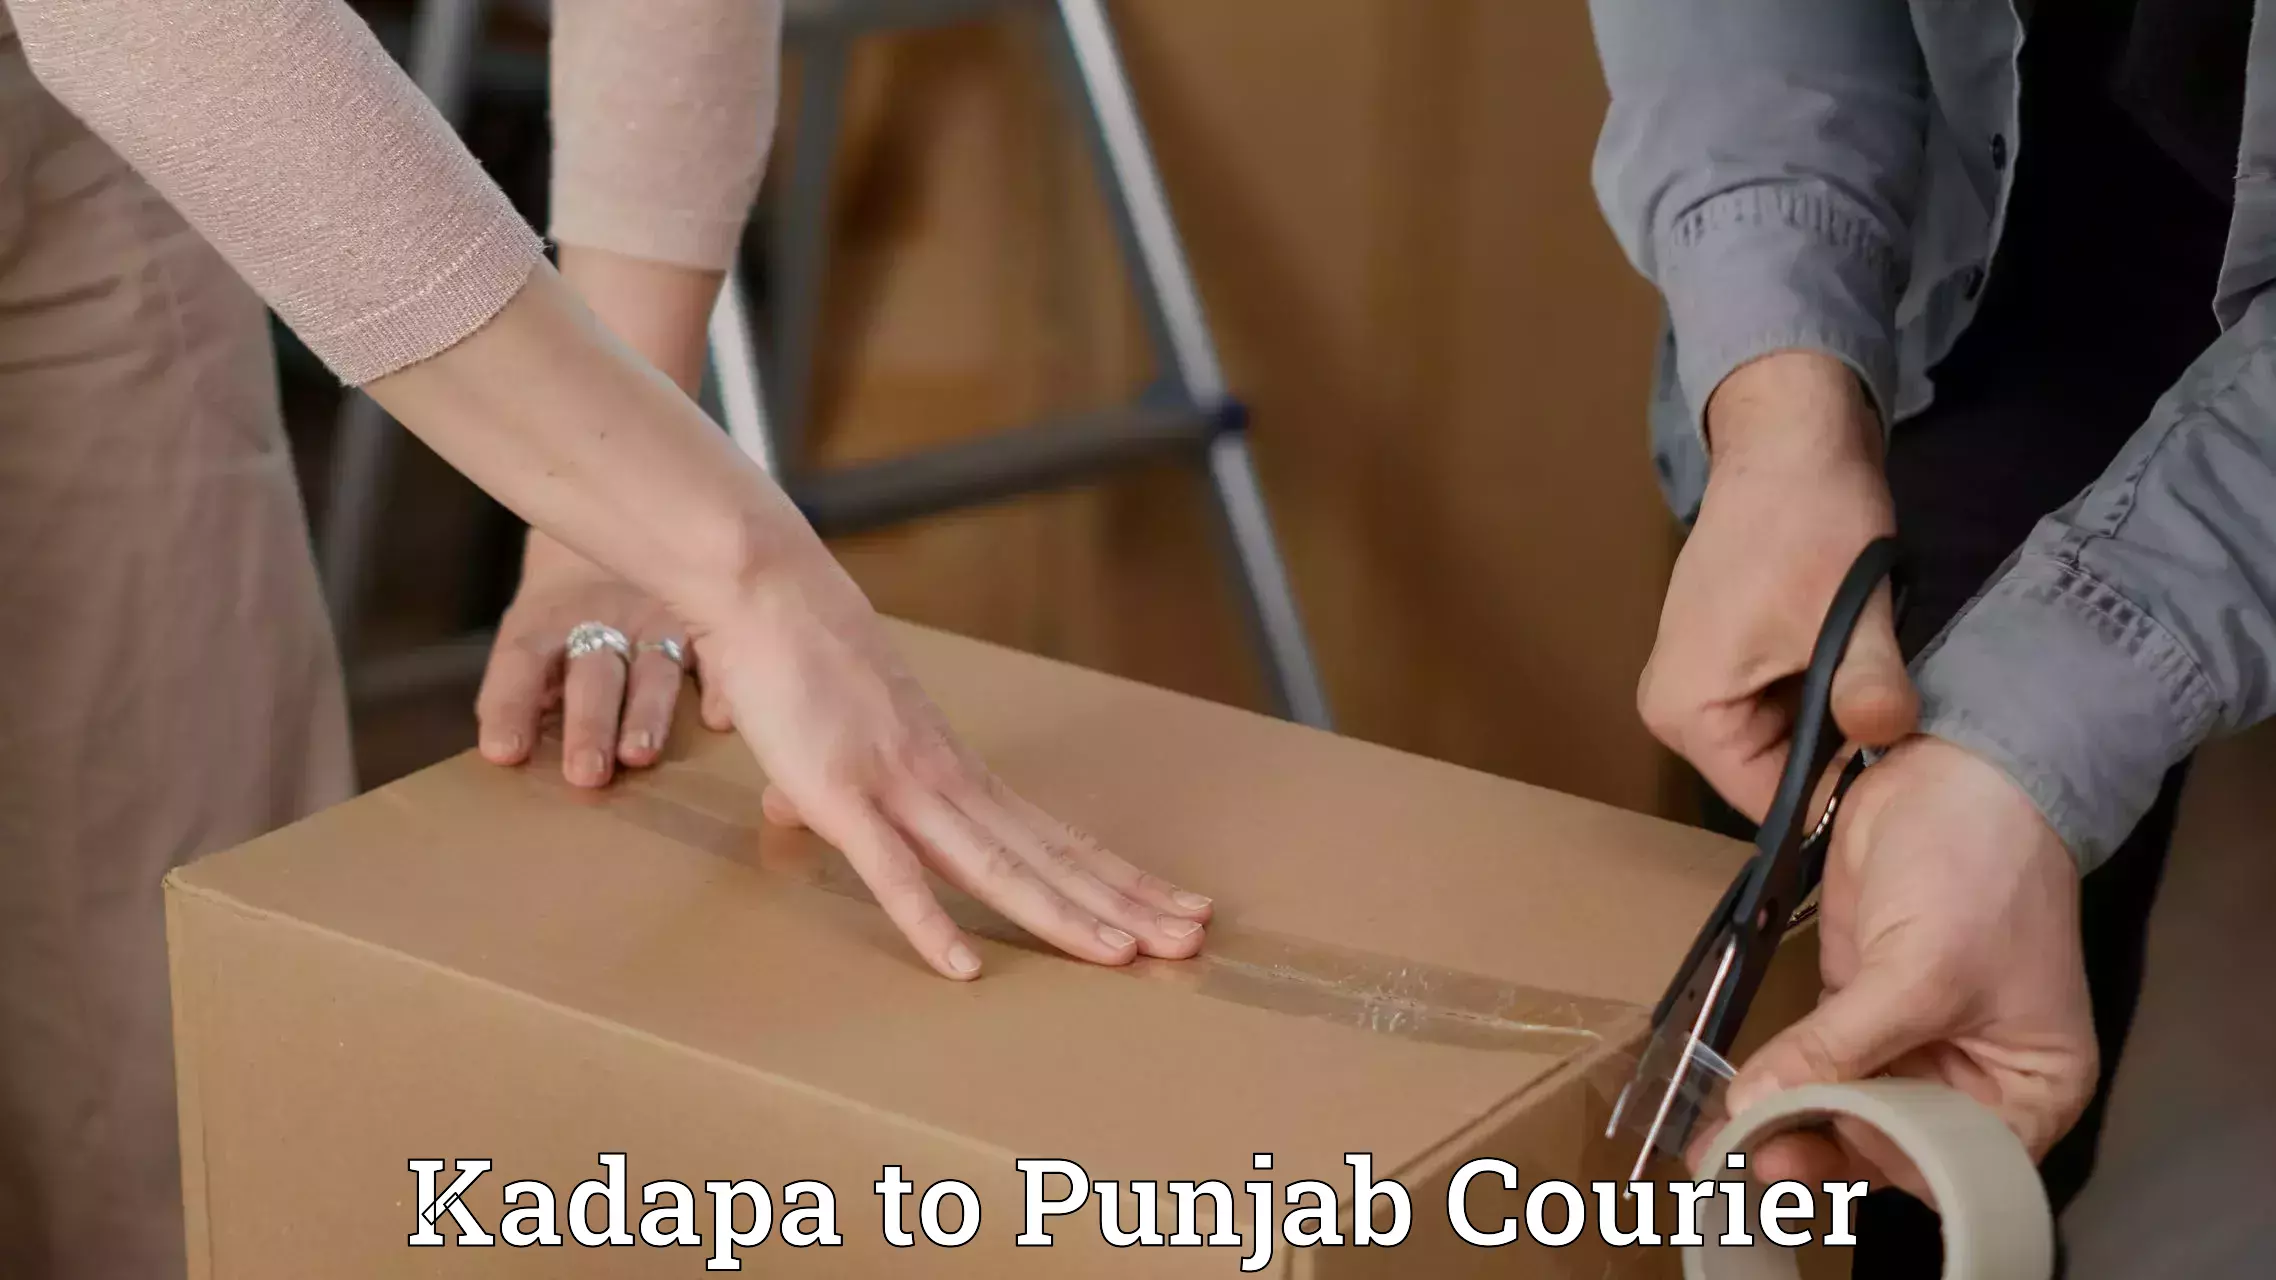 Delivery service partnership Kadapa to Punjab